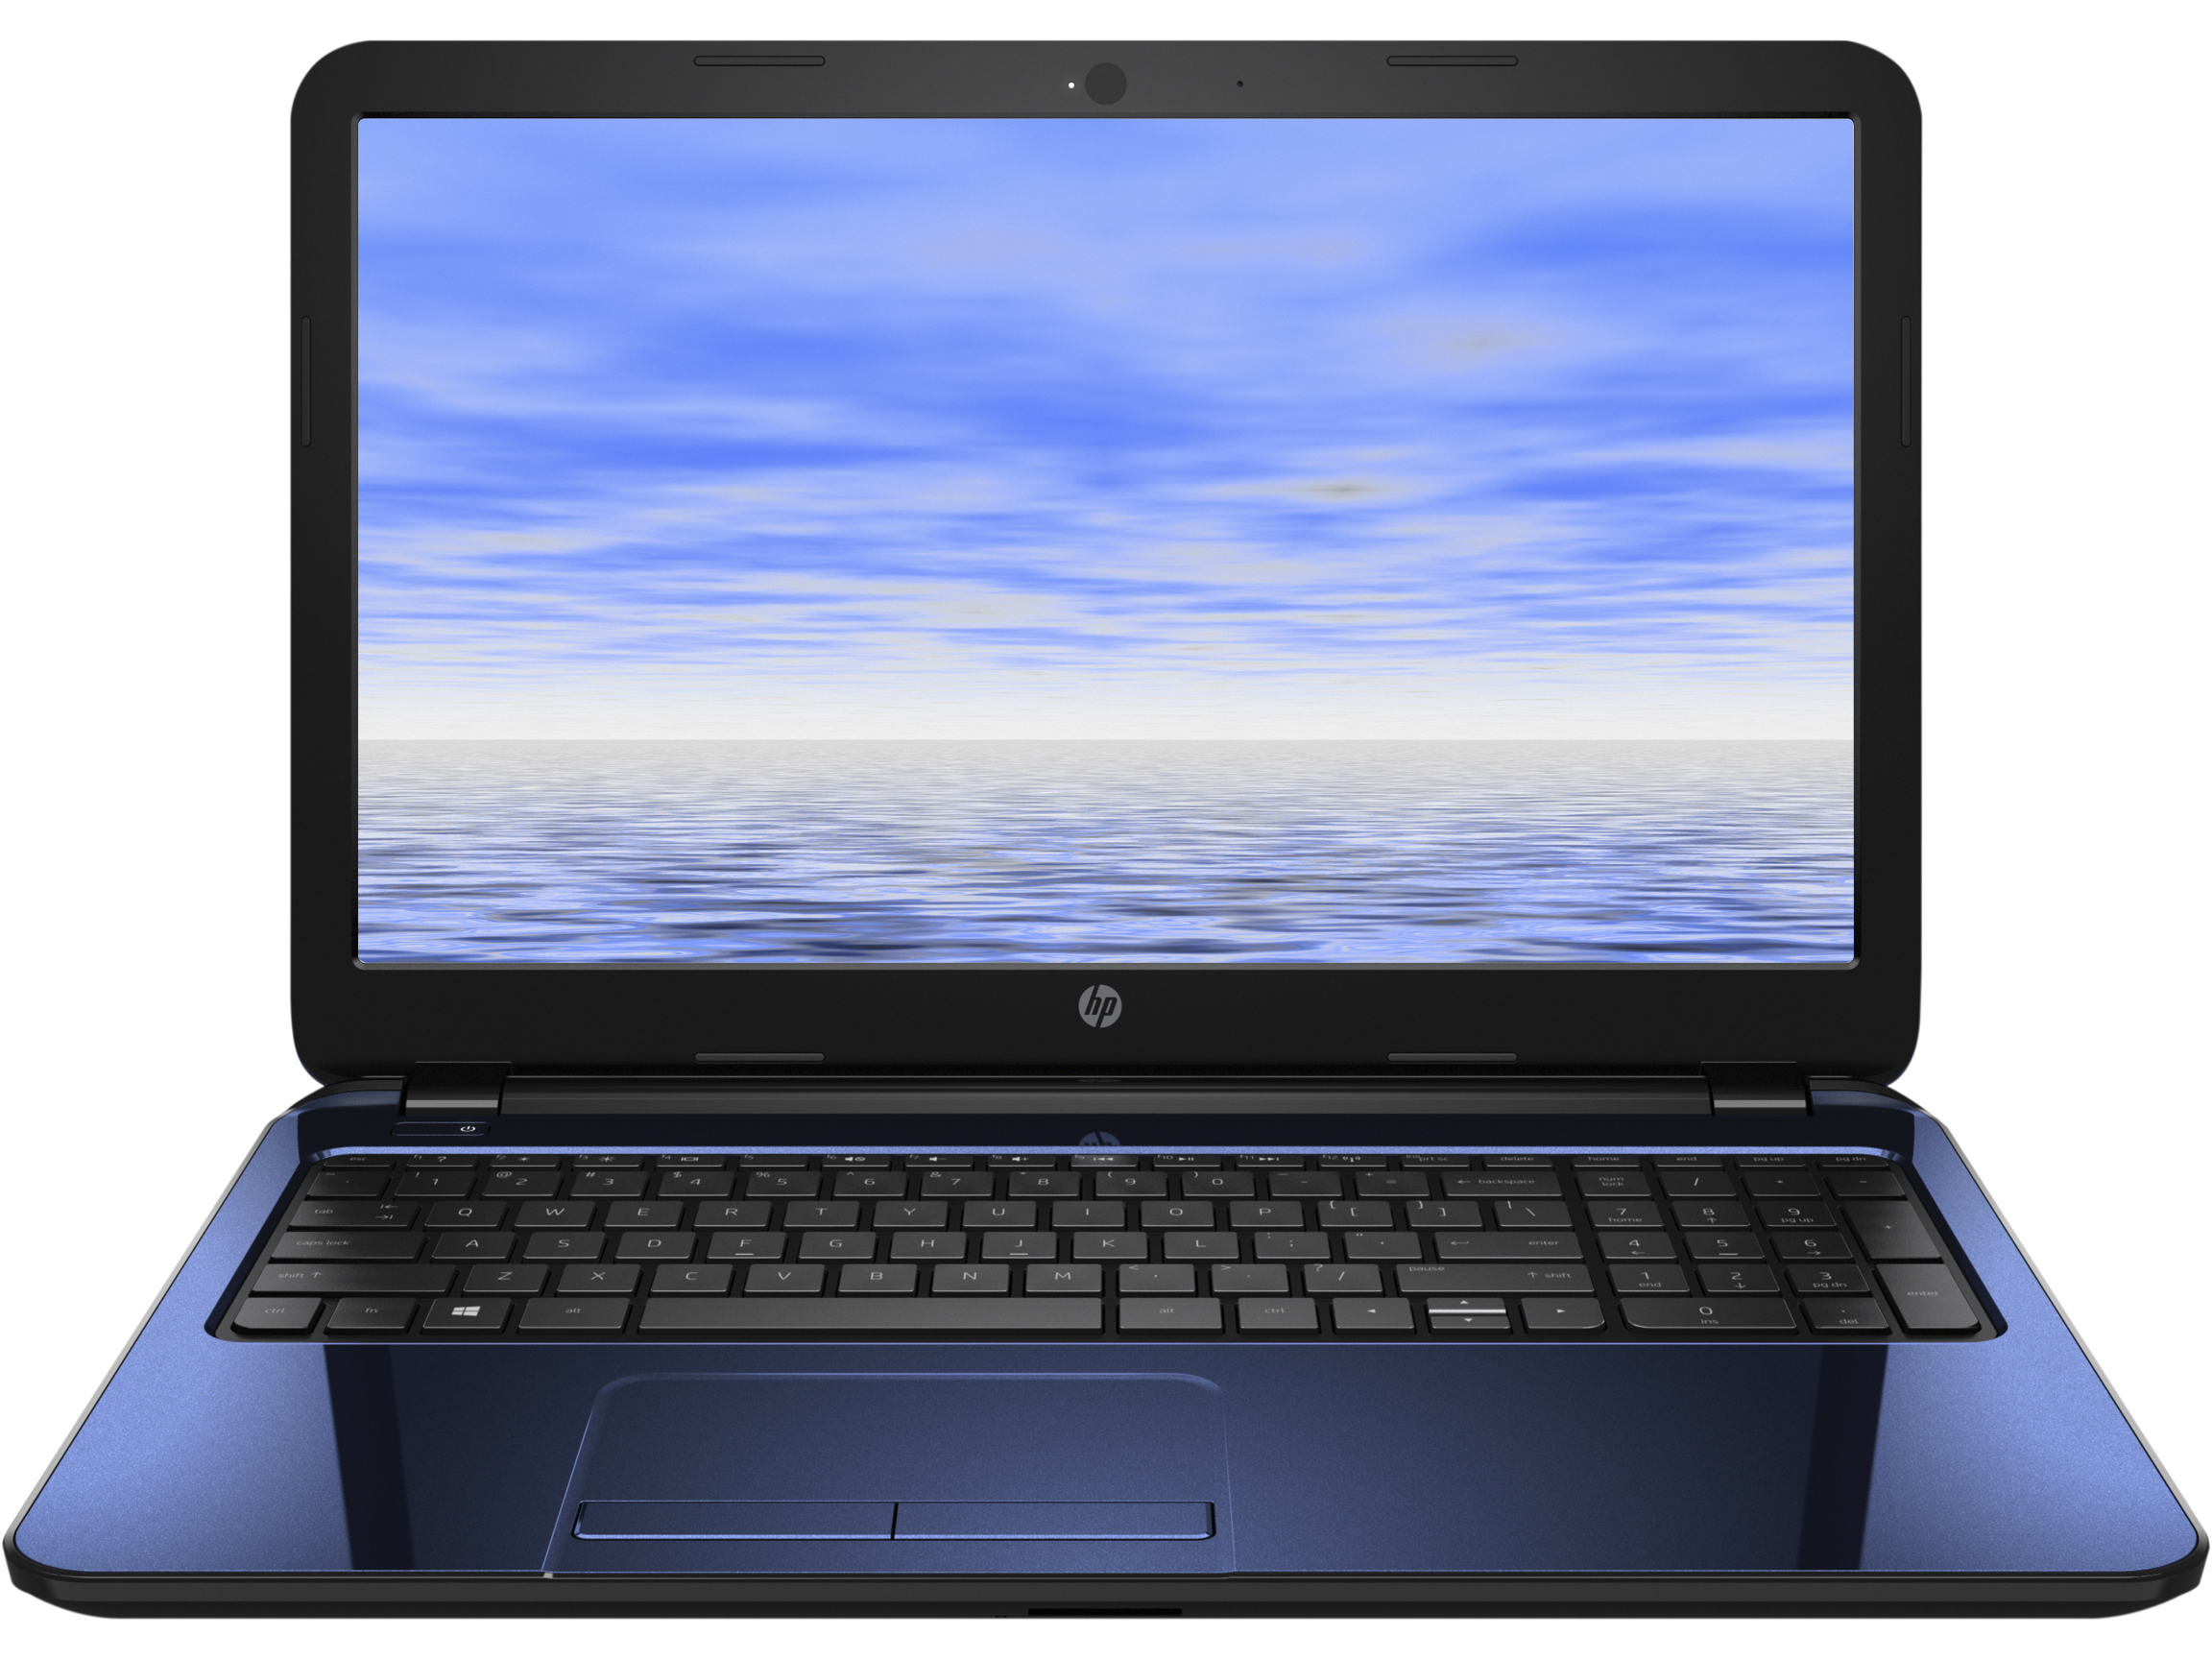 HP Laptop TouchSmart 15 g075nr AMD A6 Series A6 6310 (1.80 GHz) 4 GB Memory 500 GB HDD AMD Radeon R4 Series 15.6" Windows 8.1